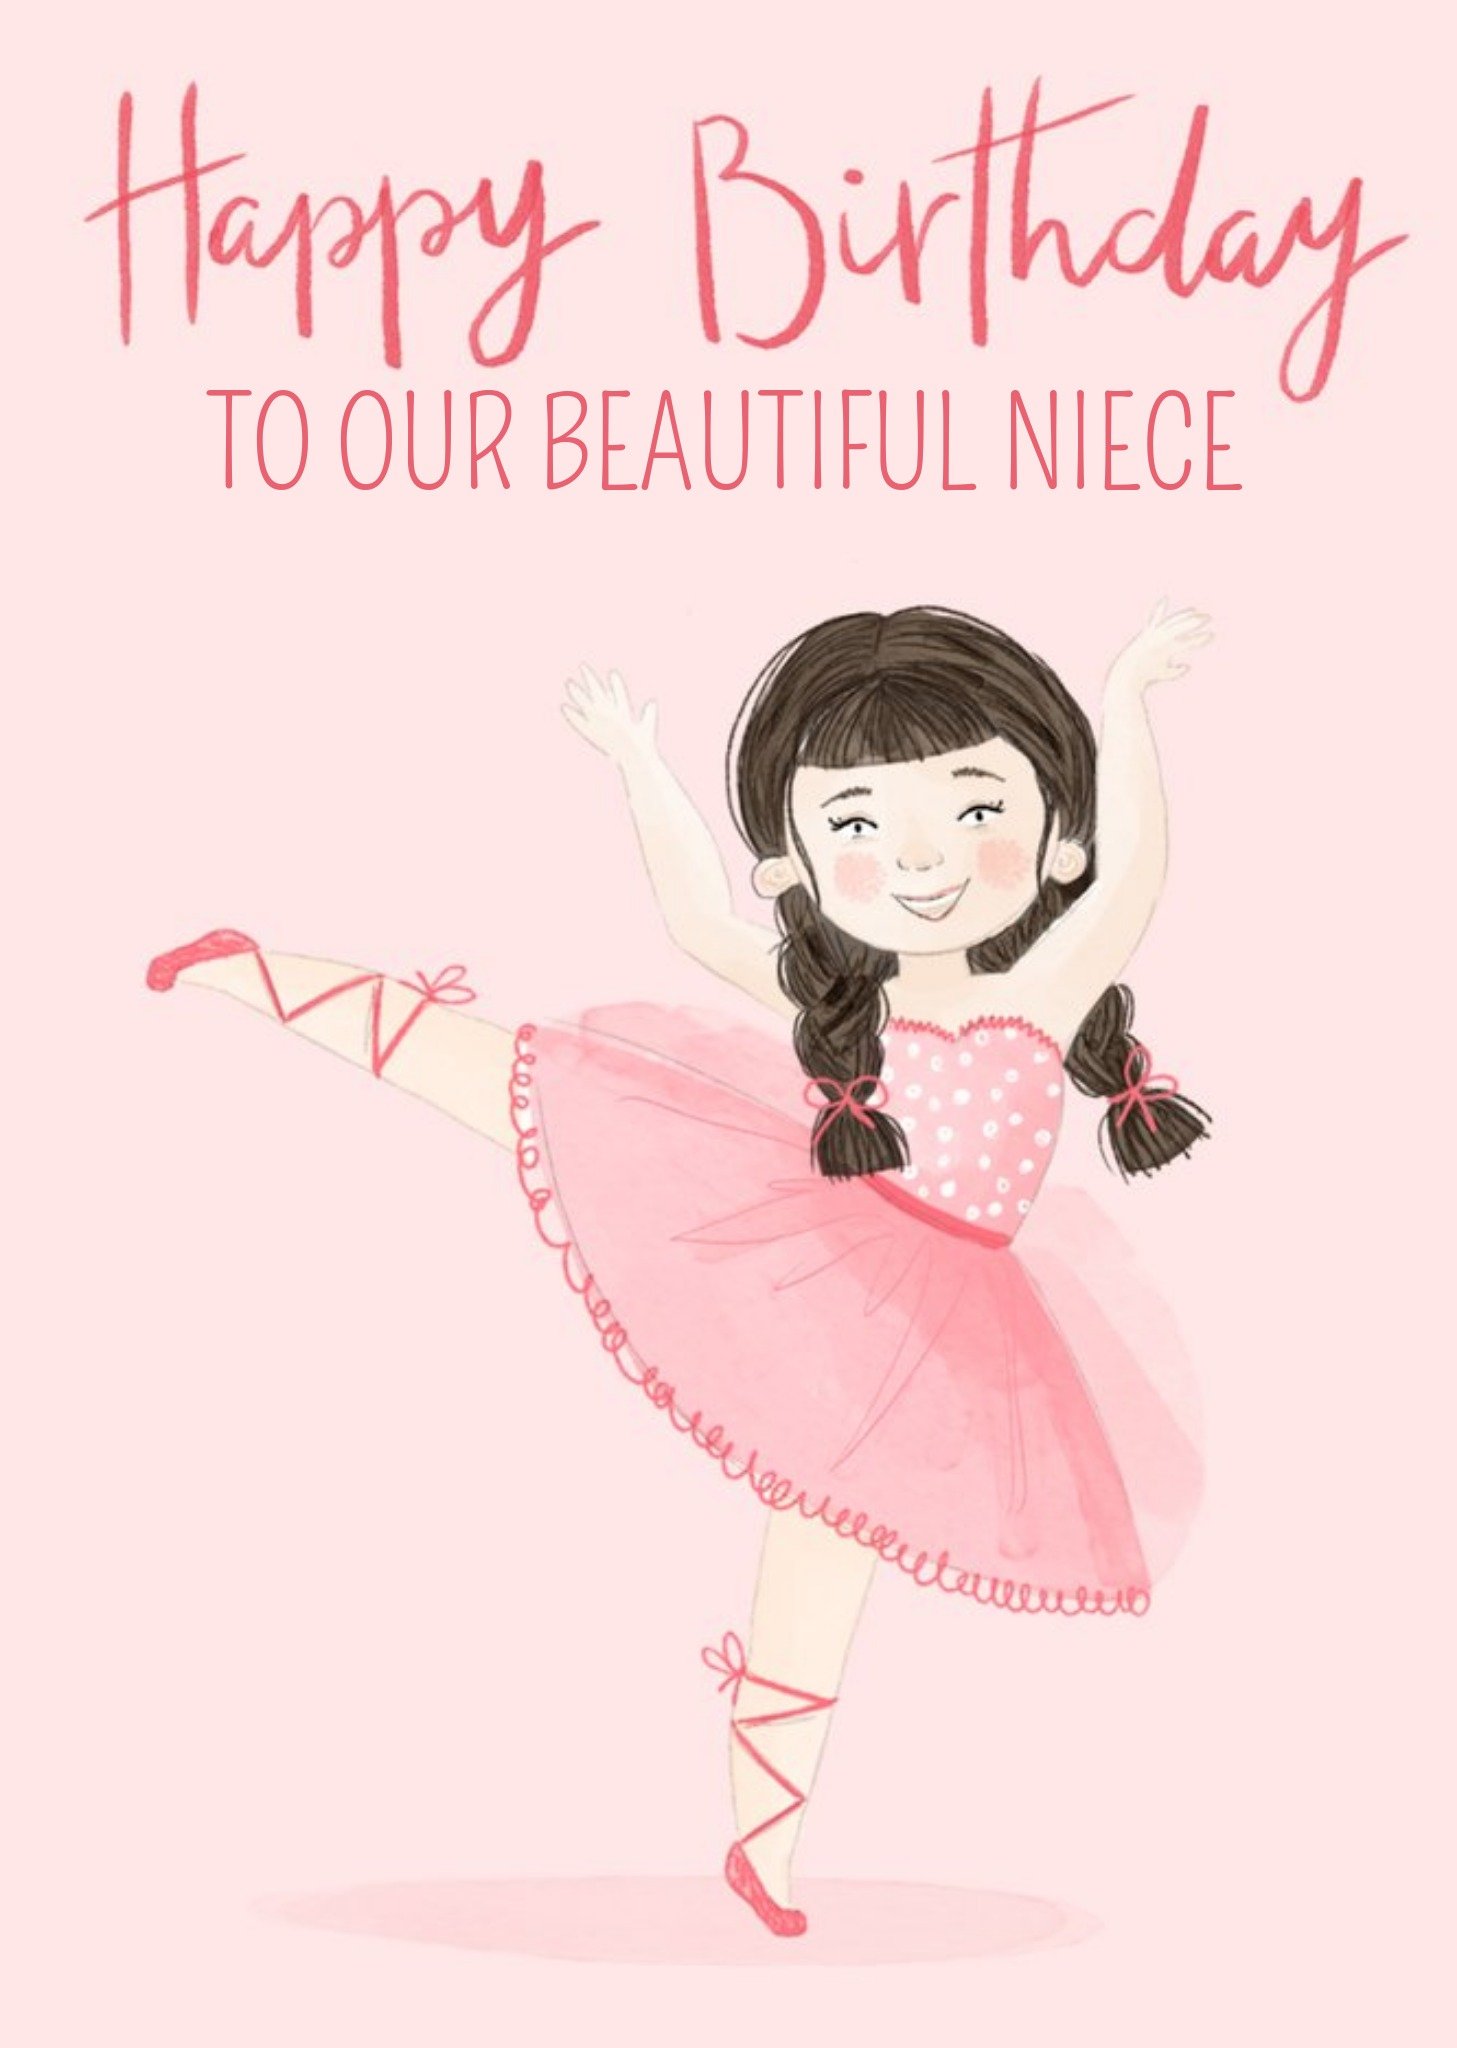 Okey Dokey Design Cute Ballerina Illustration Beautiful Niece Birthday Card, Large